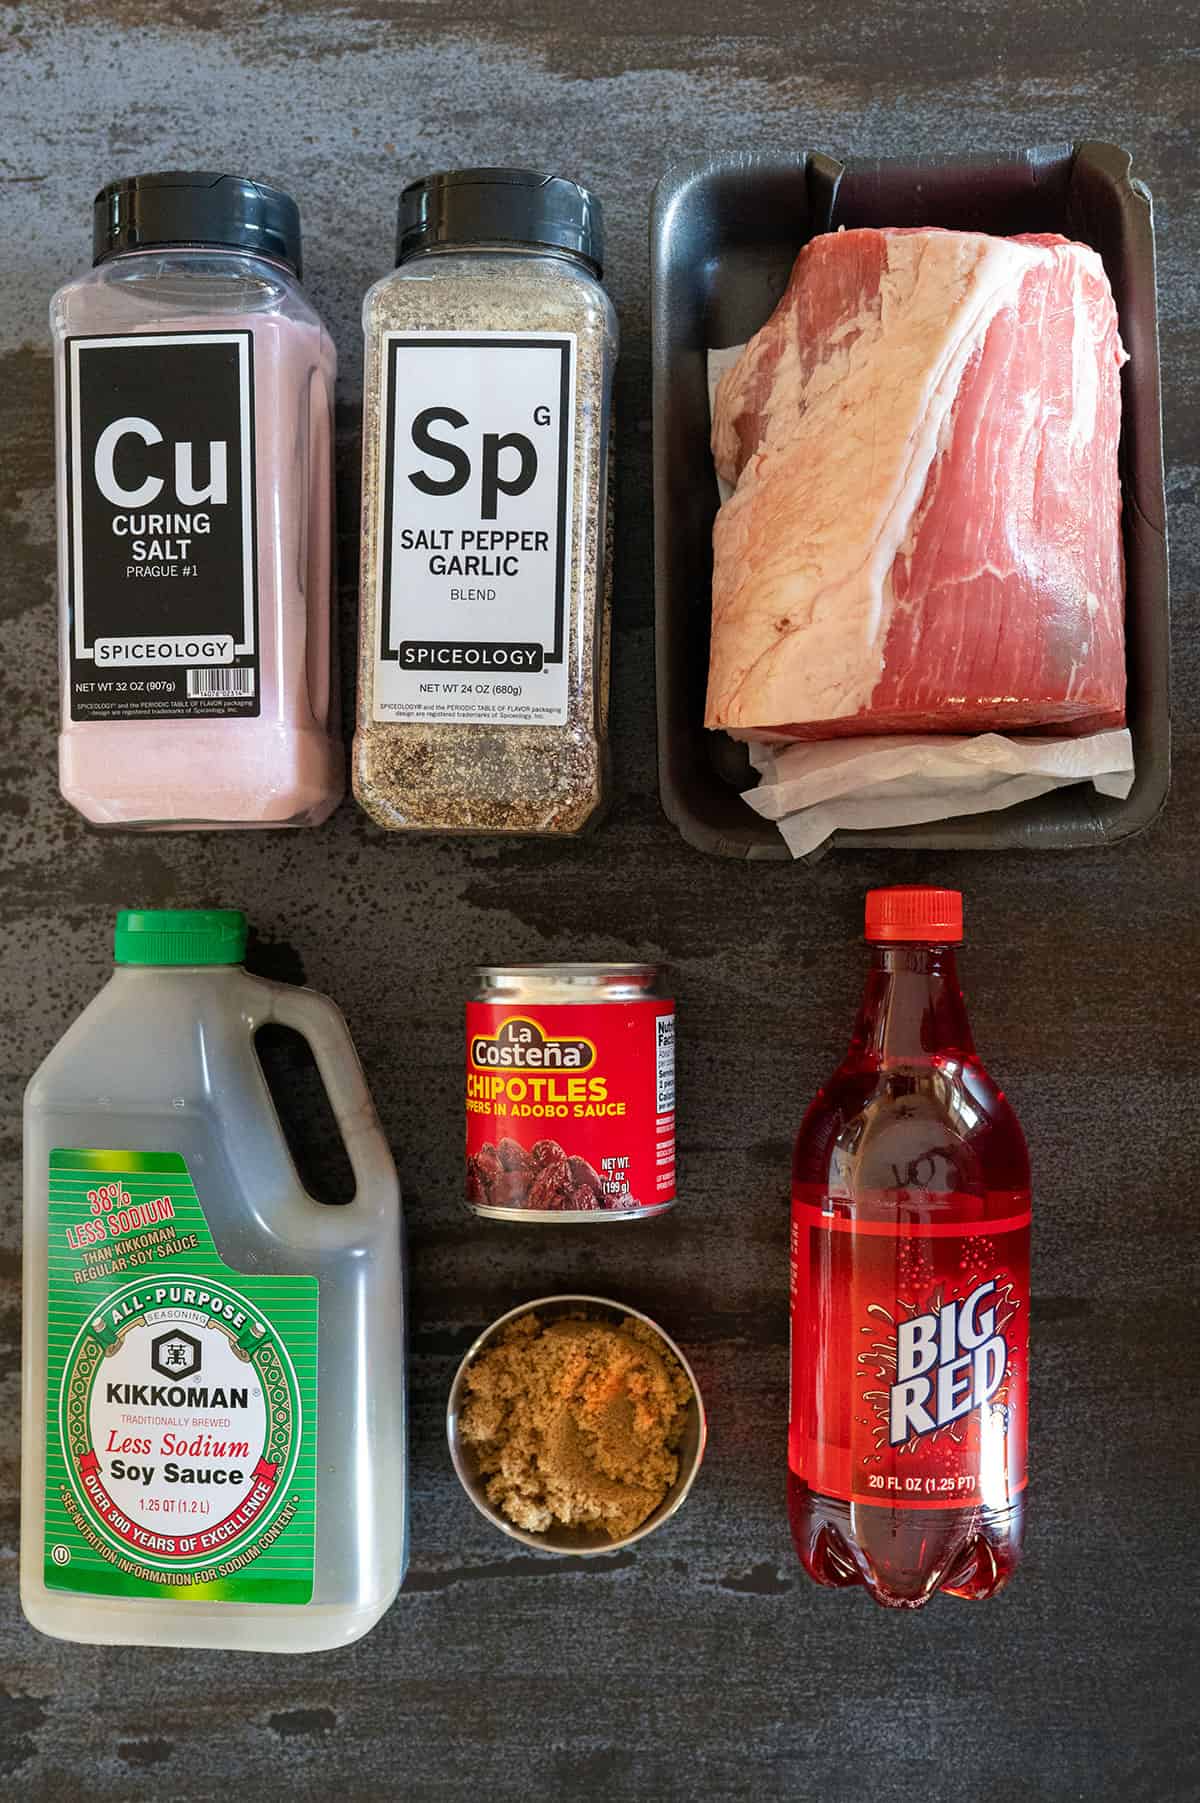 Ingredients for Big Red Beef Jerky: Big Red soda, soy sauce, eye of round roast, chipotles, brown sugar, salt pepper garlic, curing salt.